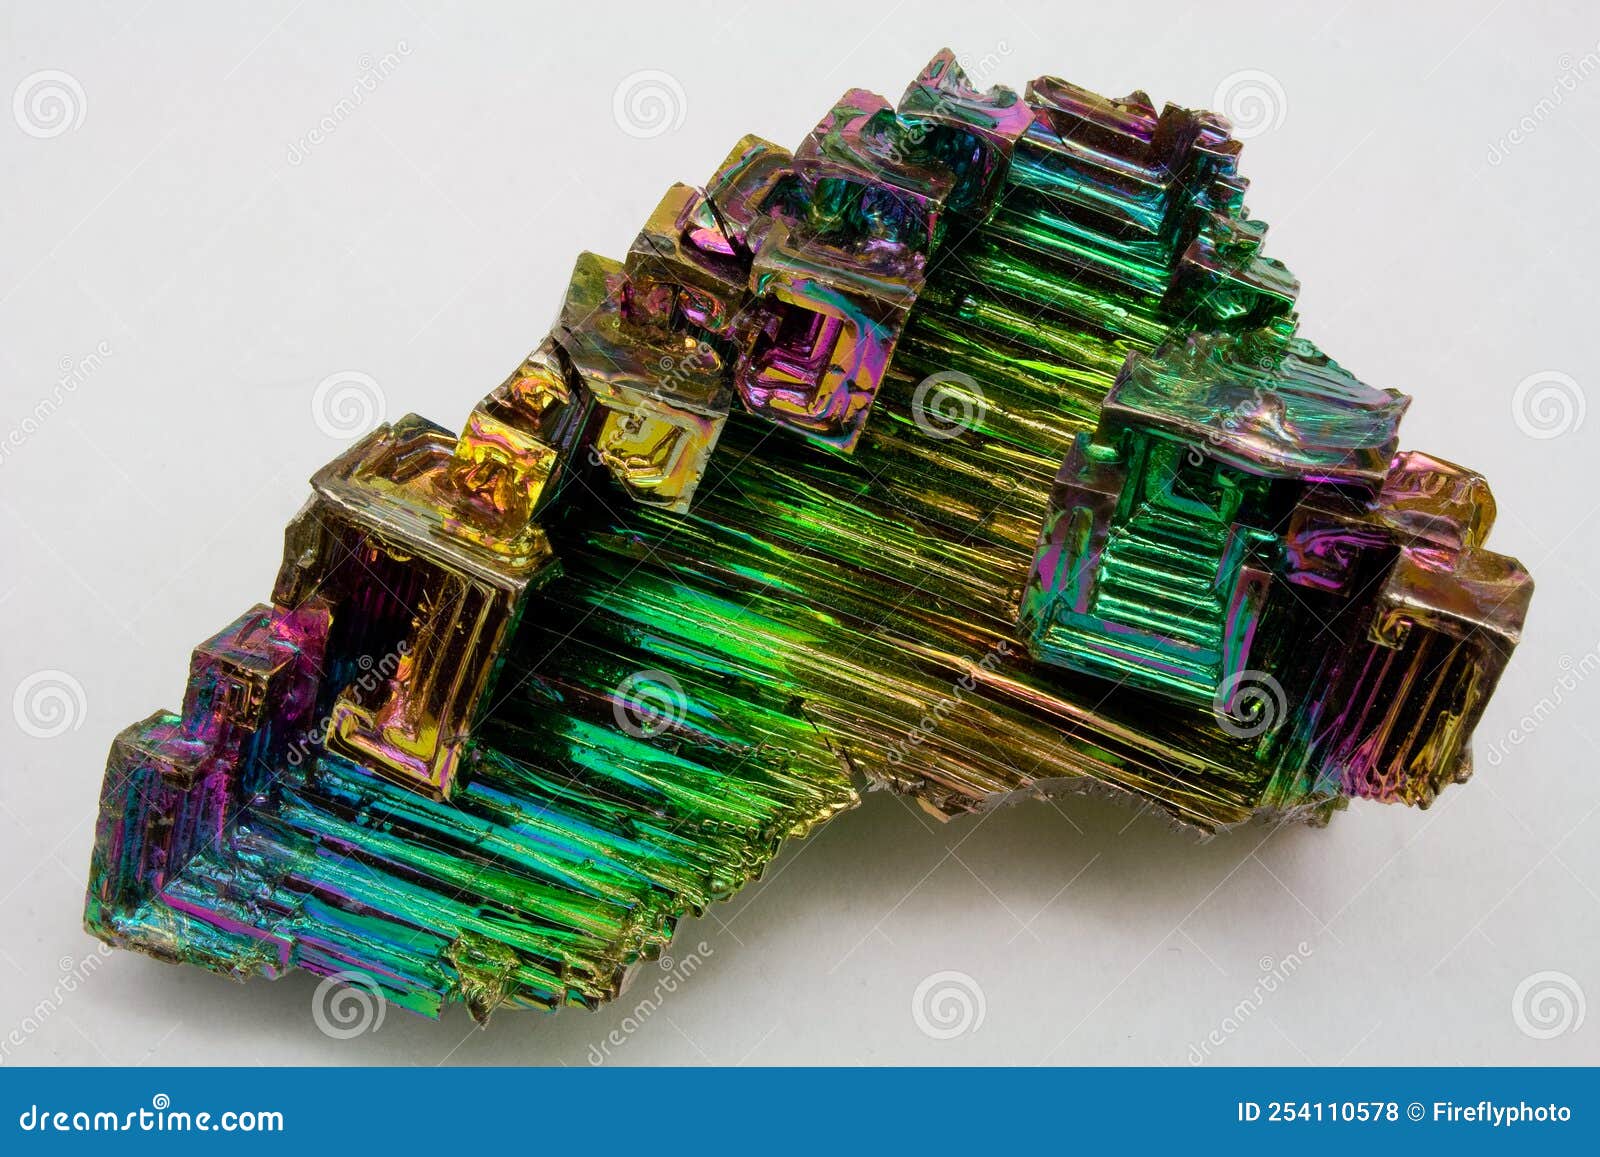 crystalline bismuth metal